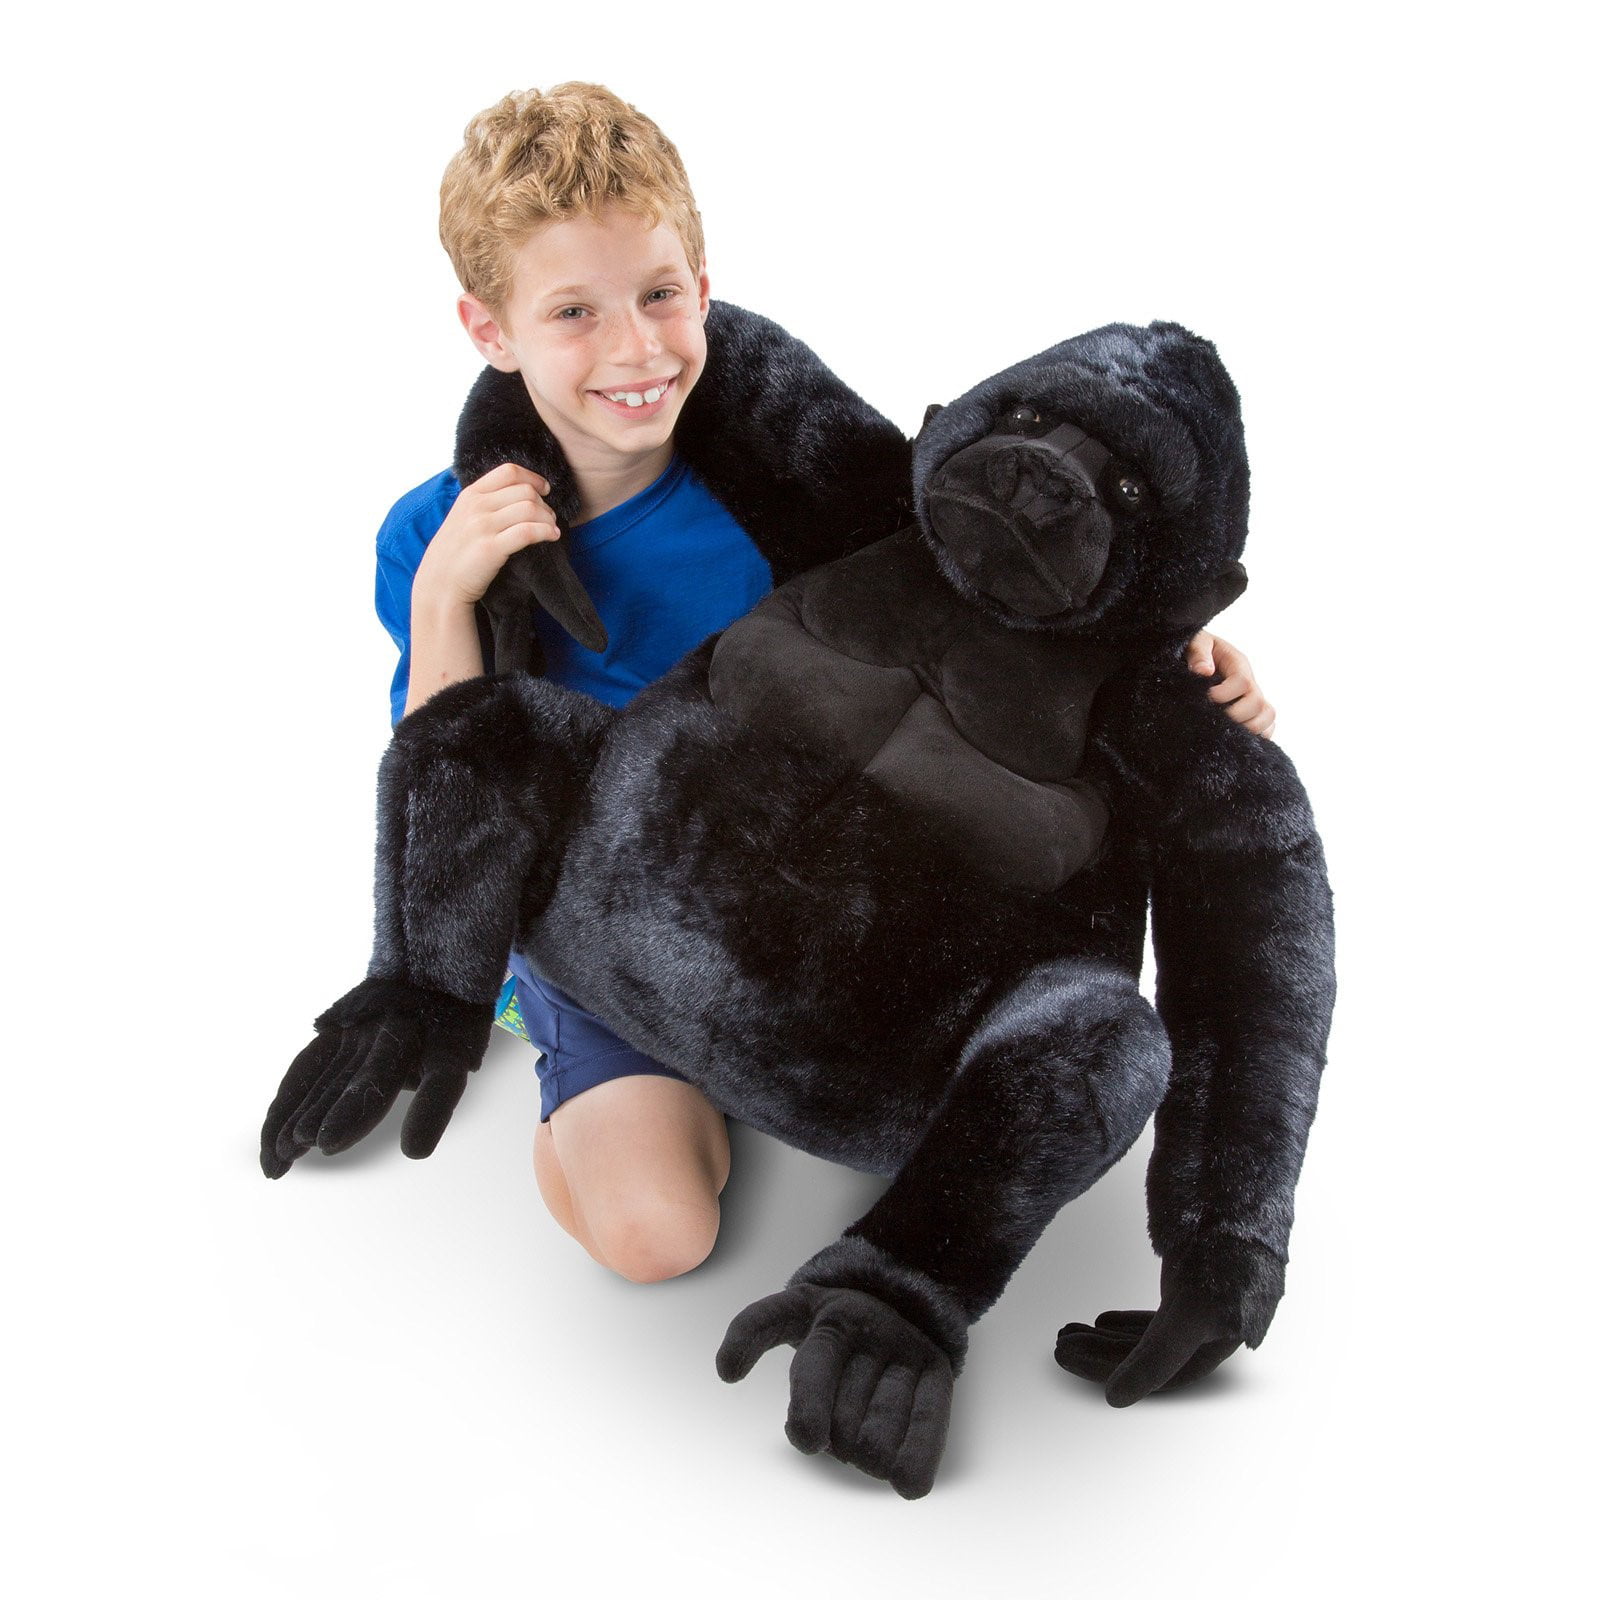 giant gorilla stuffed animal